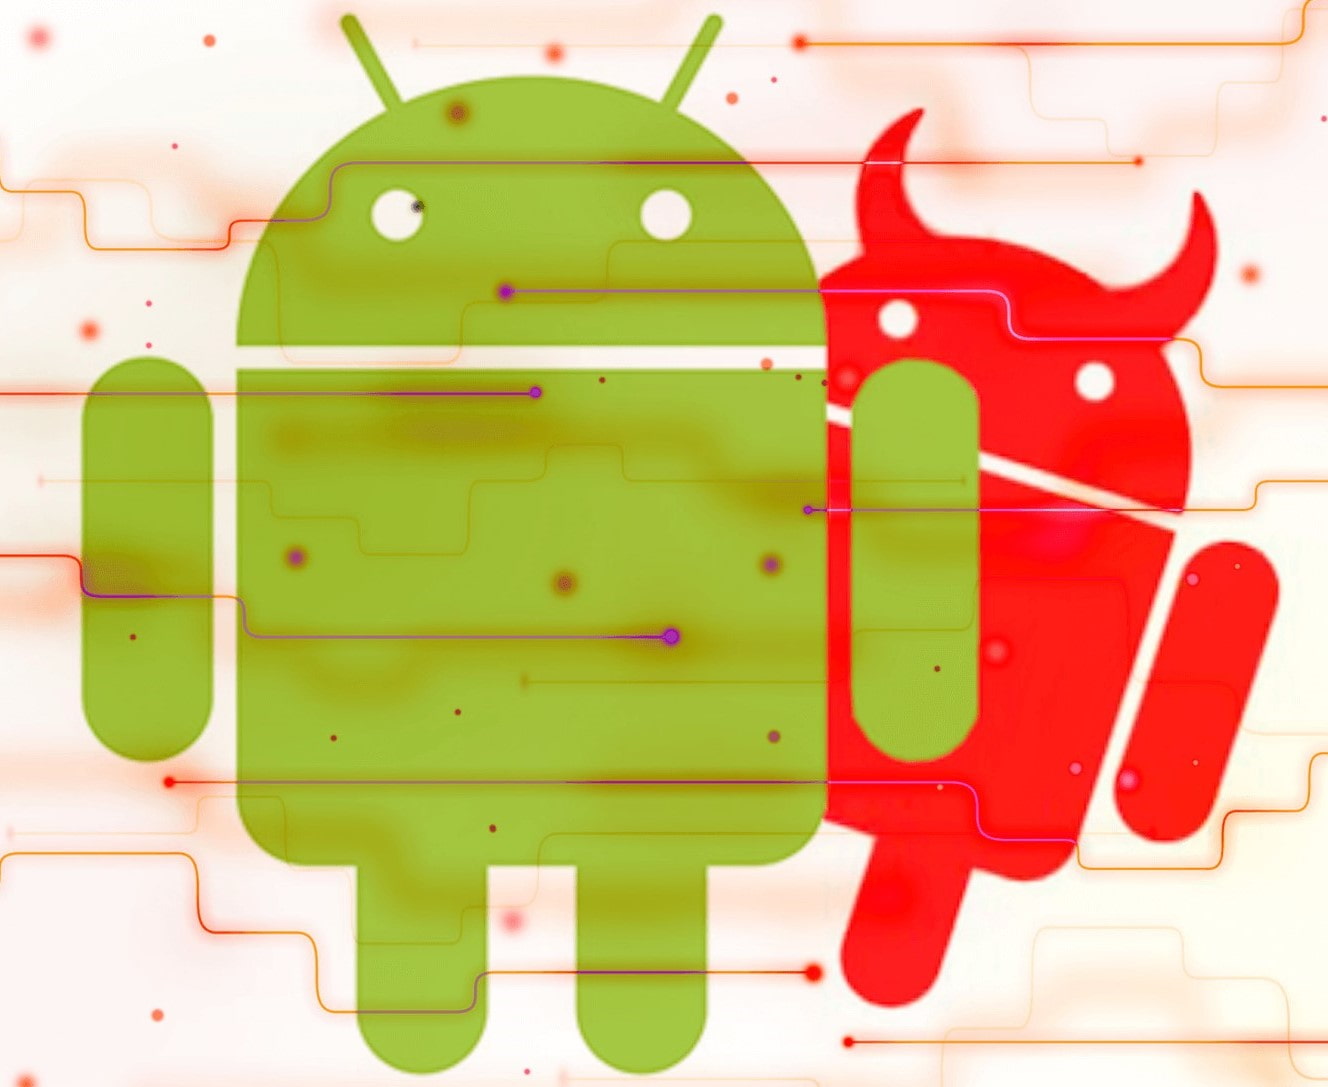 Android: due terzi degli antivirus sono inutili